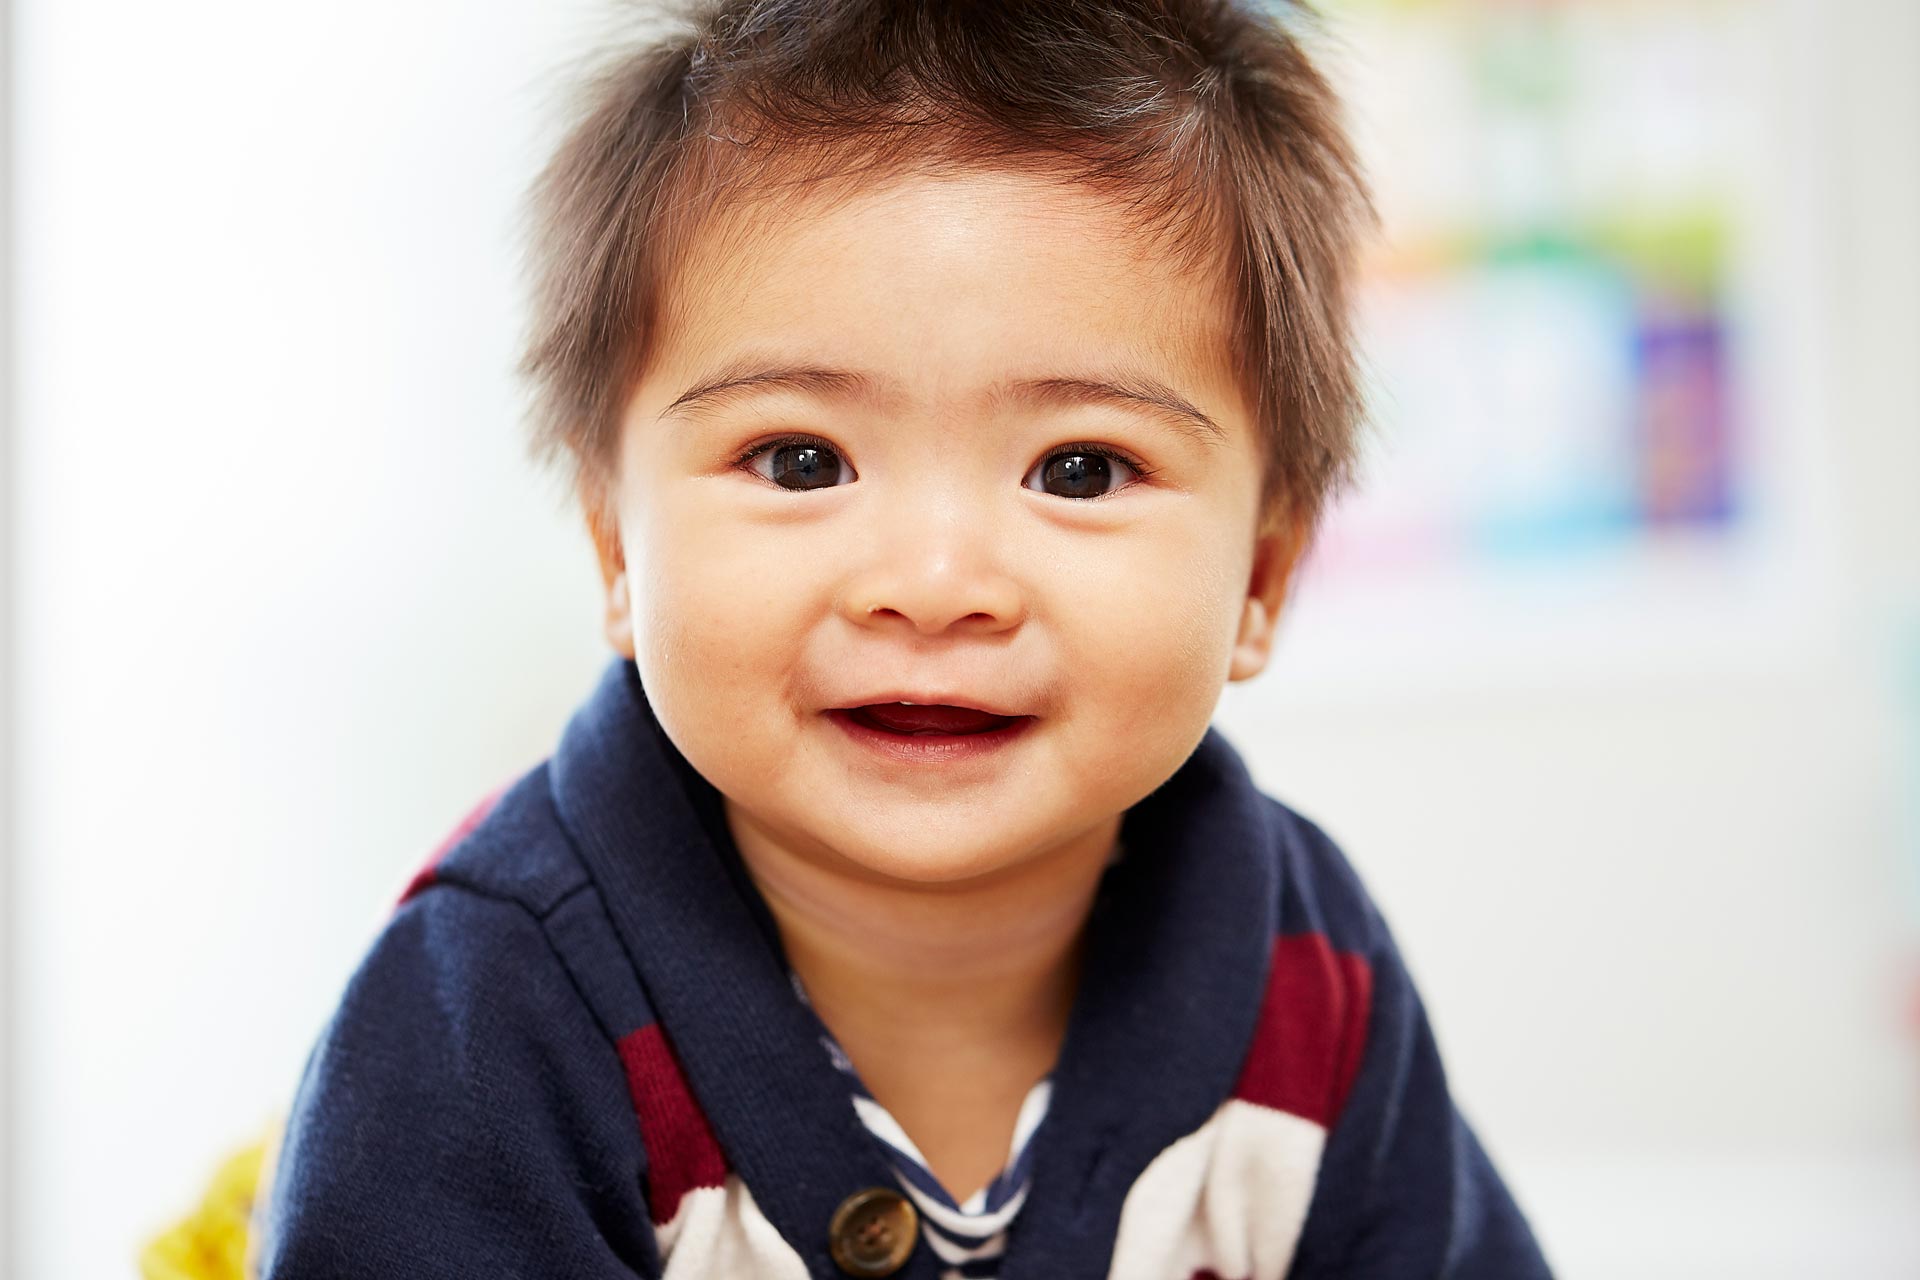 A toddler smiling